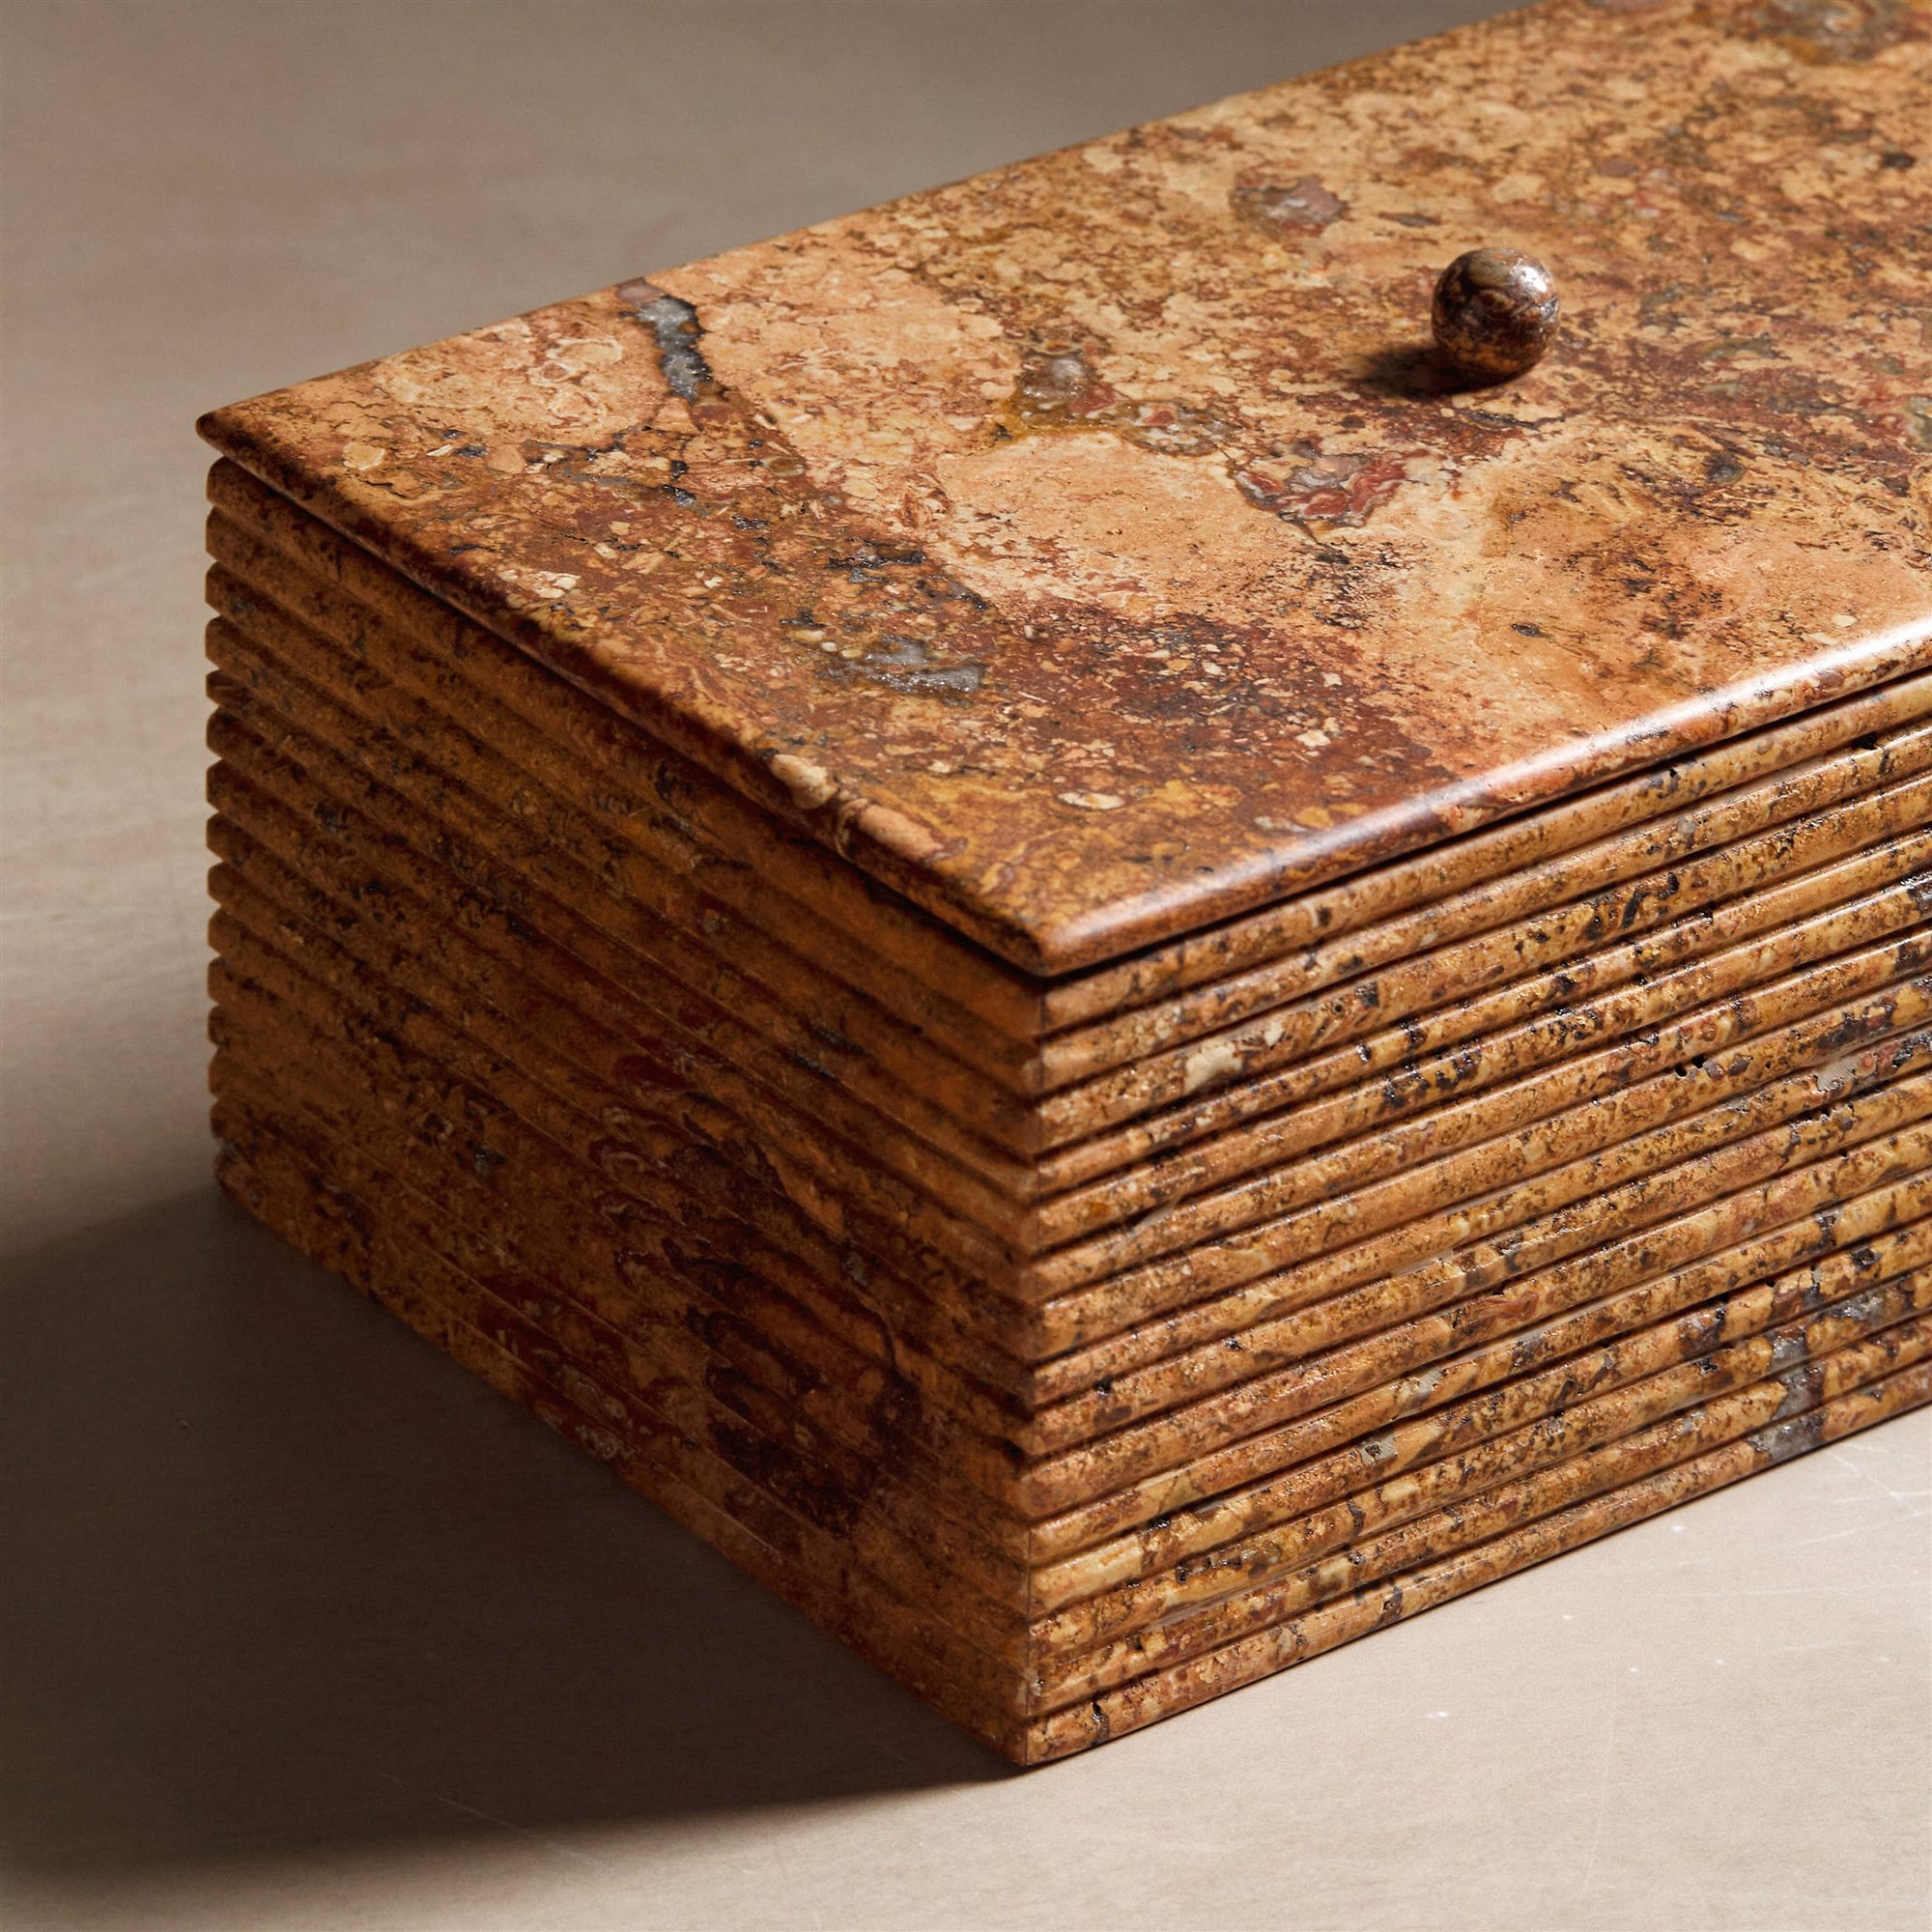 stone travertine box with ribbing detail close up